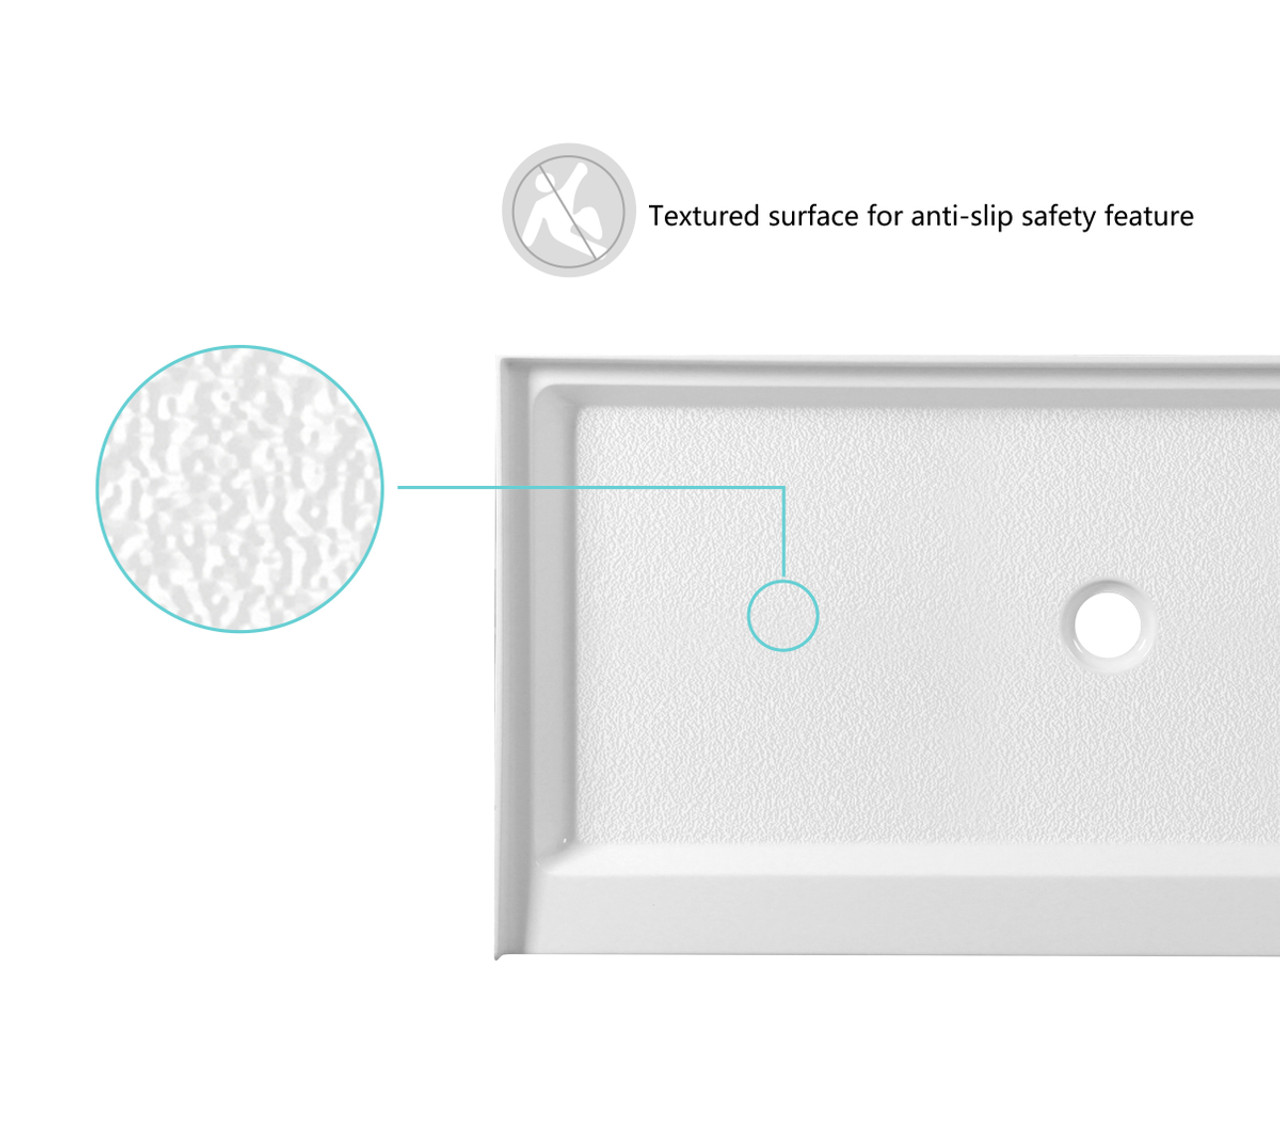 Elegant Kitchen and Bath STY01-C6030 60x30 inch Single threshold shower tray center drain in glossy white